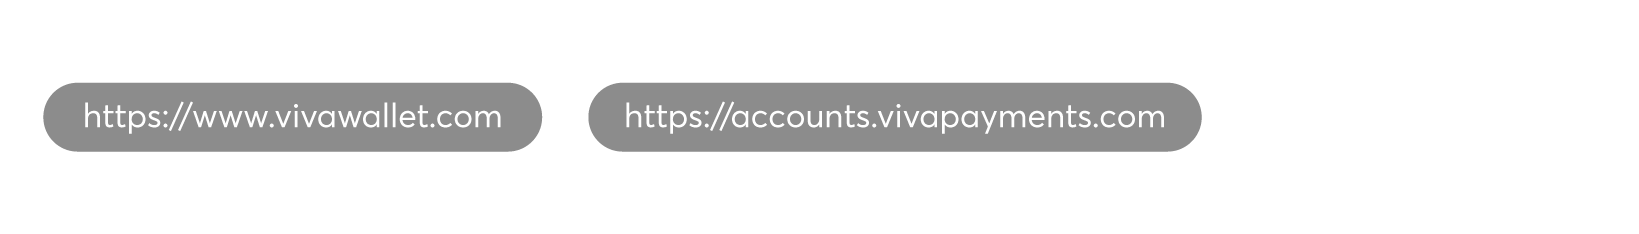 viva.com Reviews  Read Customer Service Reviews of vivawallet.com